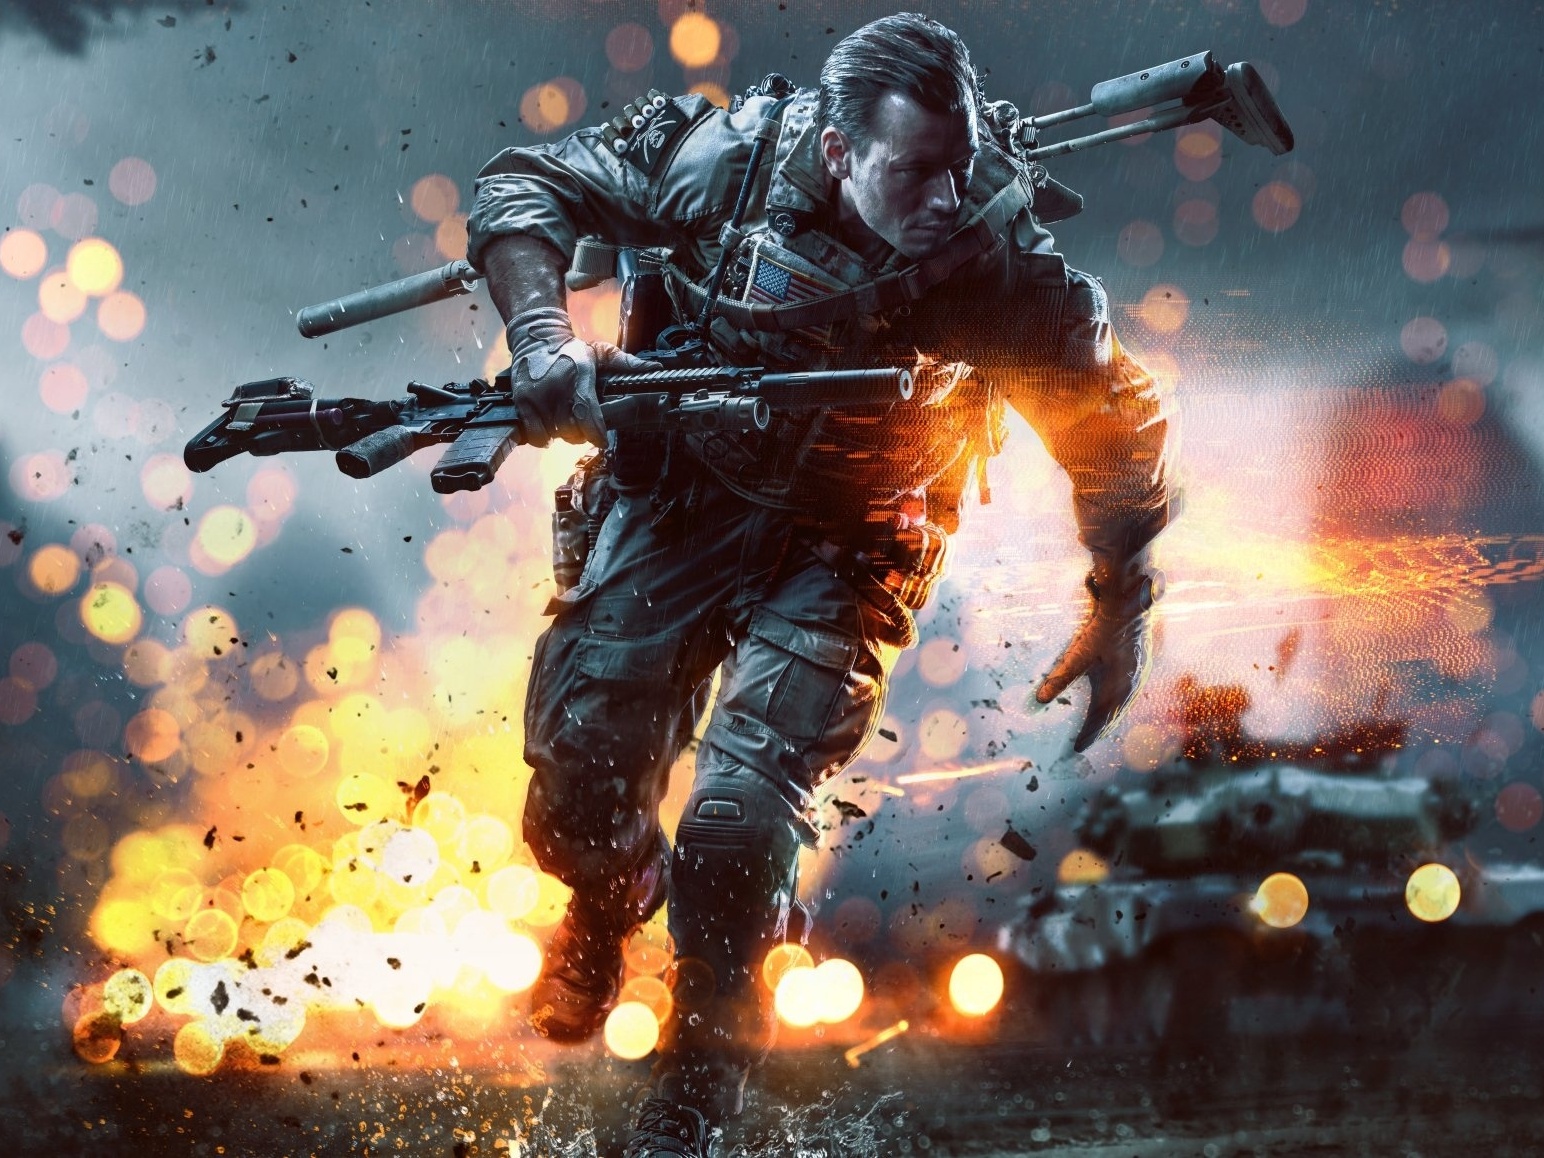 Prime Gaming: Battlefield 4 (PC Digital Download)